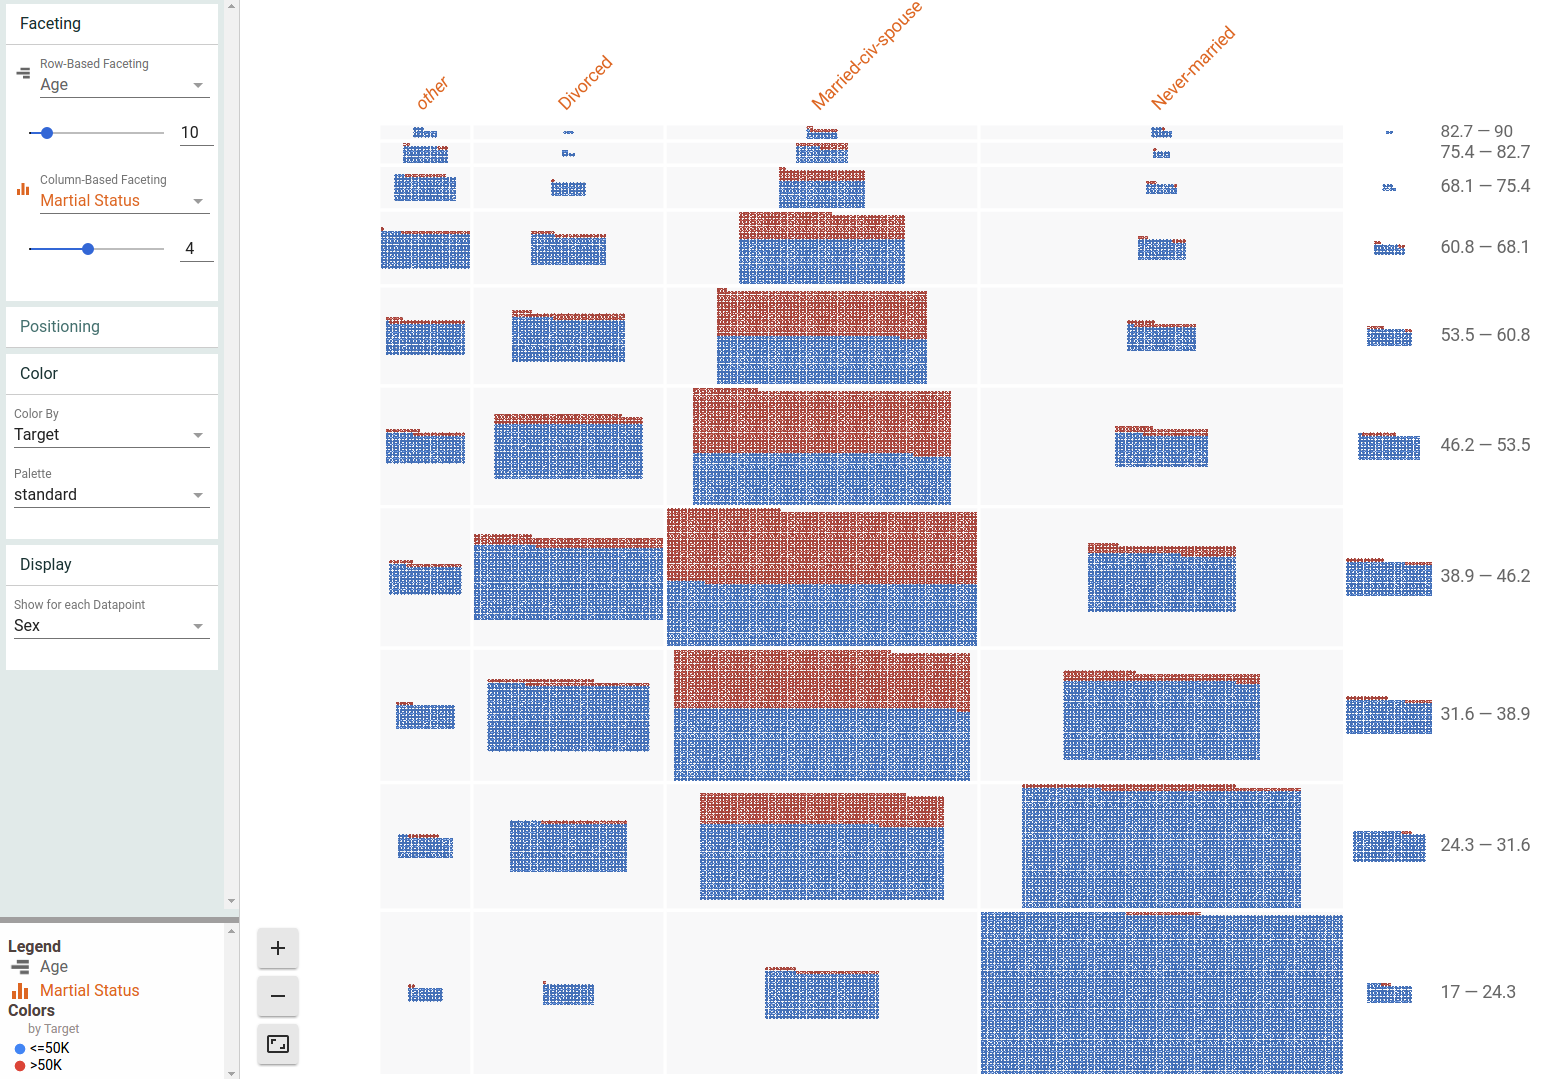 Dive visualization of UCI census data